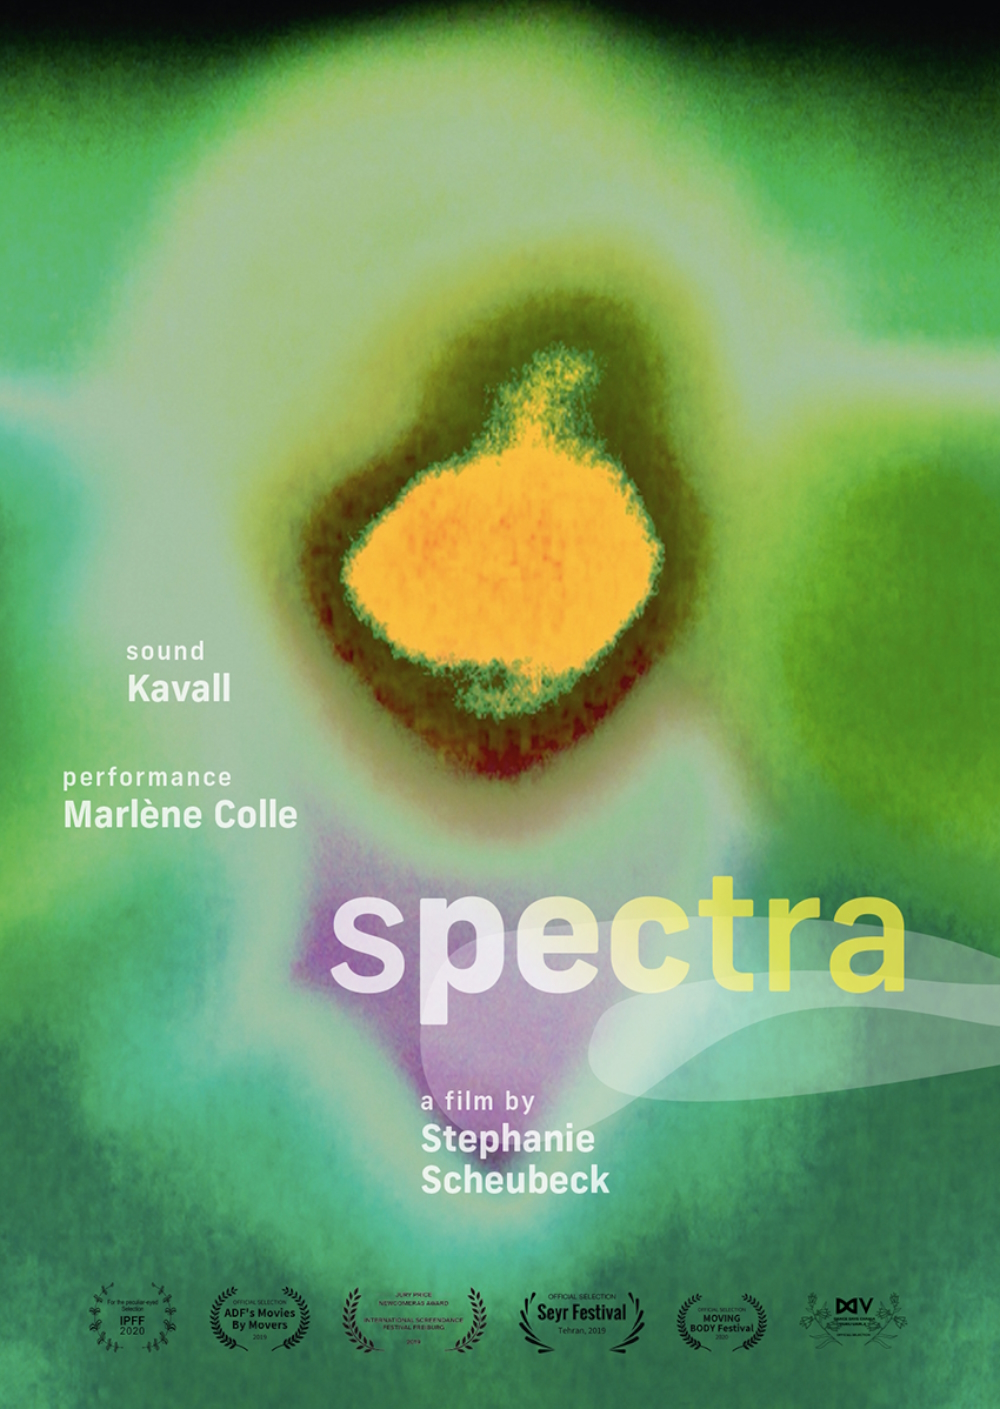 Poster for Stephanie Scheubeck's awarded film Spectra.